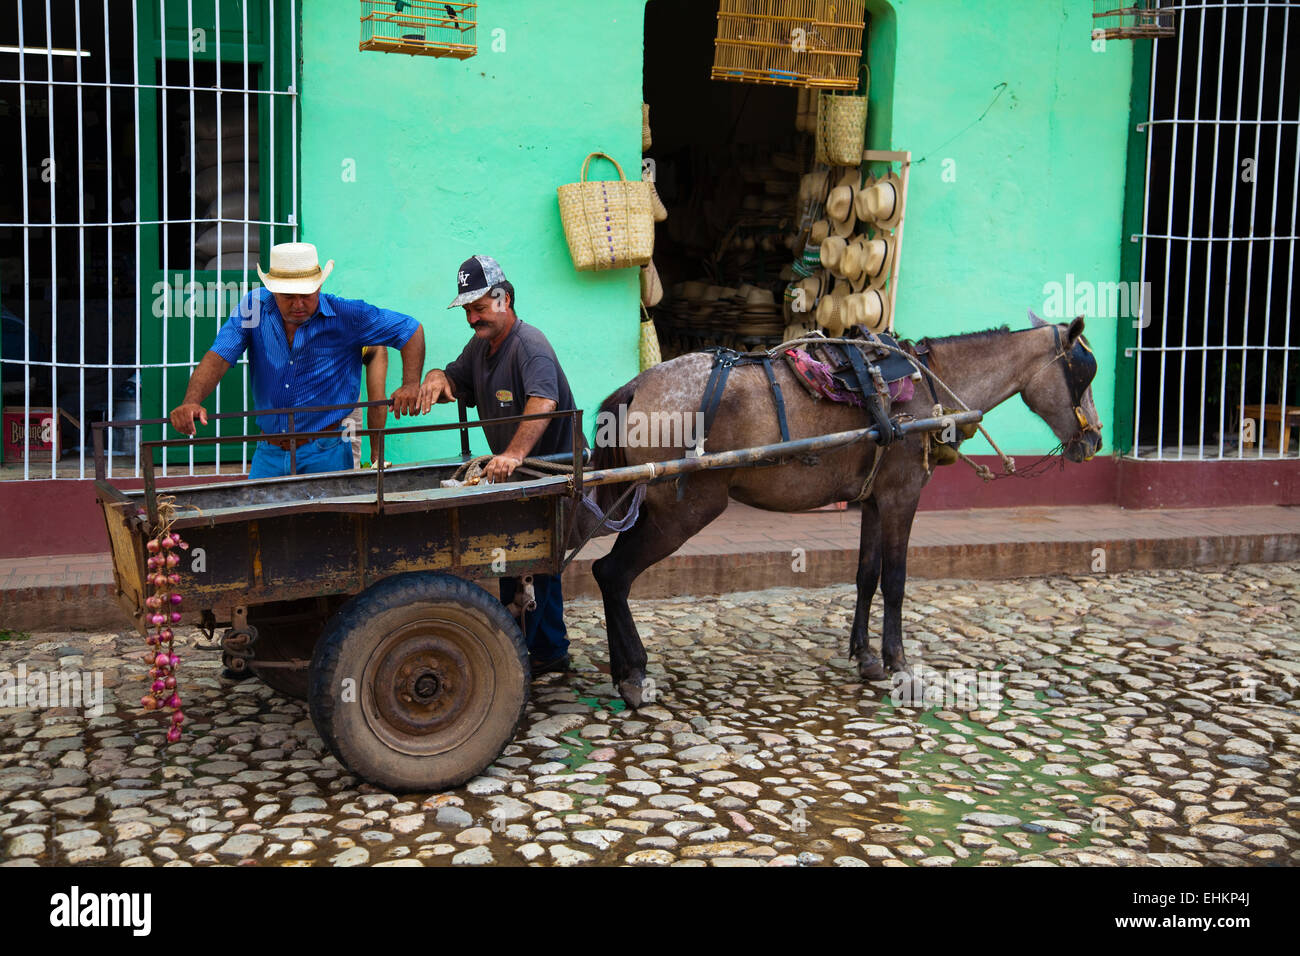 Les hommes dans la rue Commercial, Trinidad, Cuba Banque D'Images